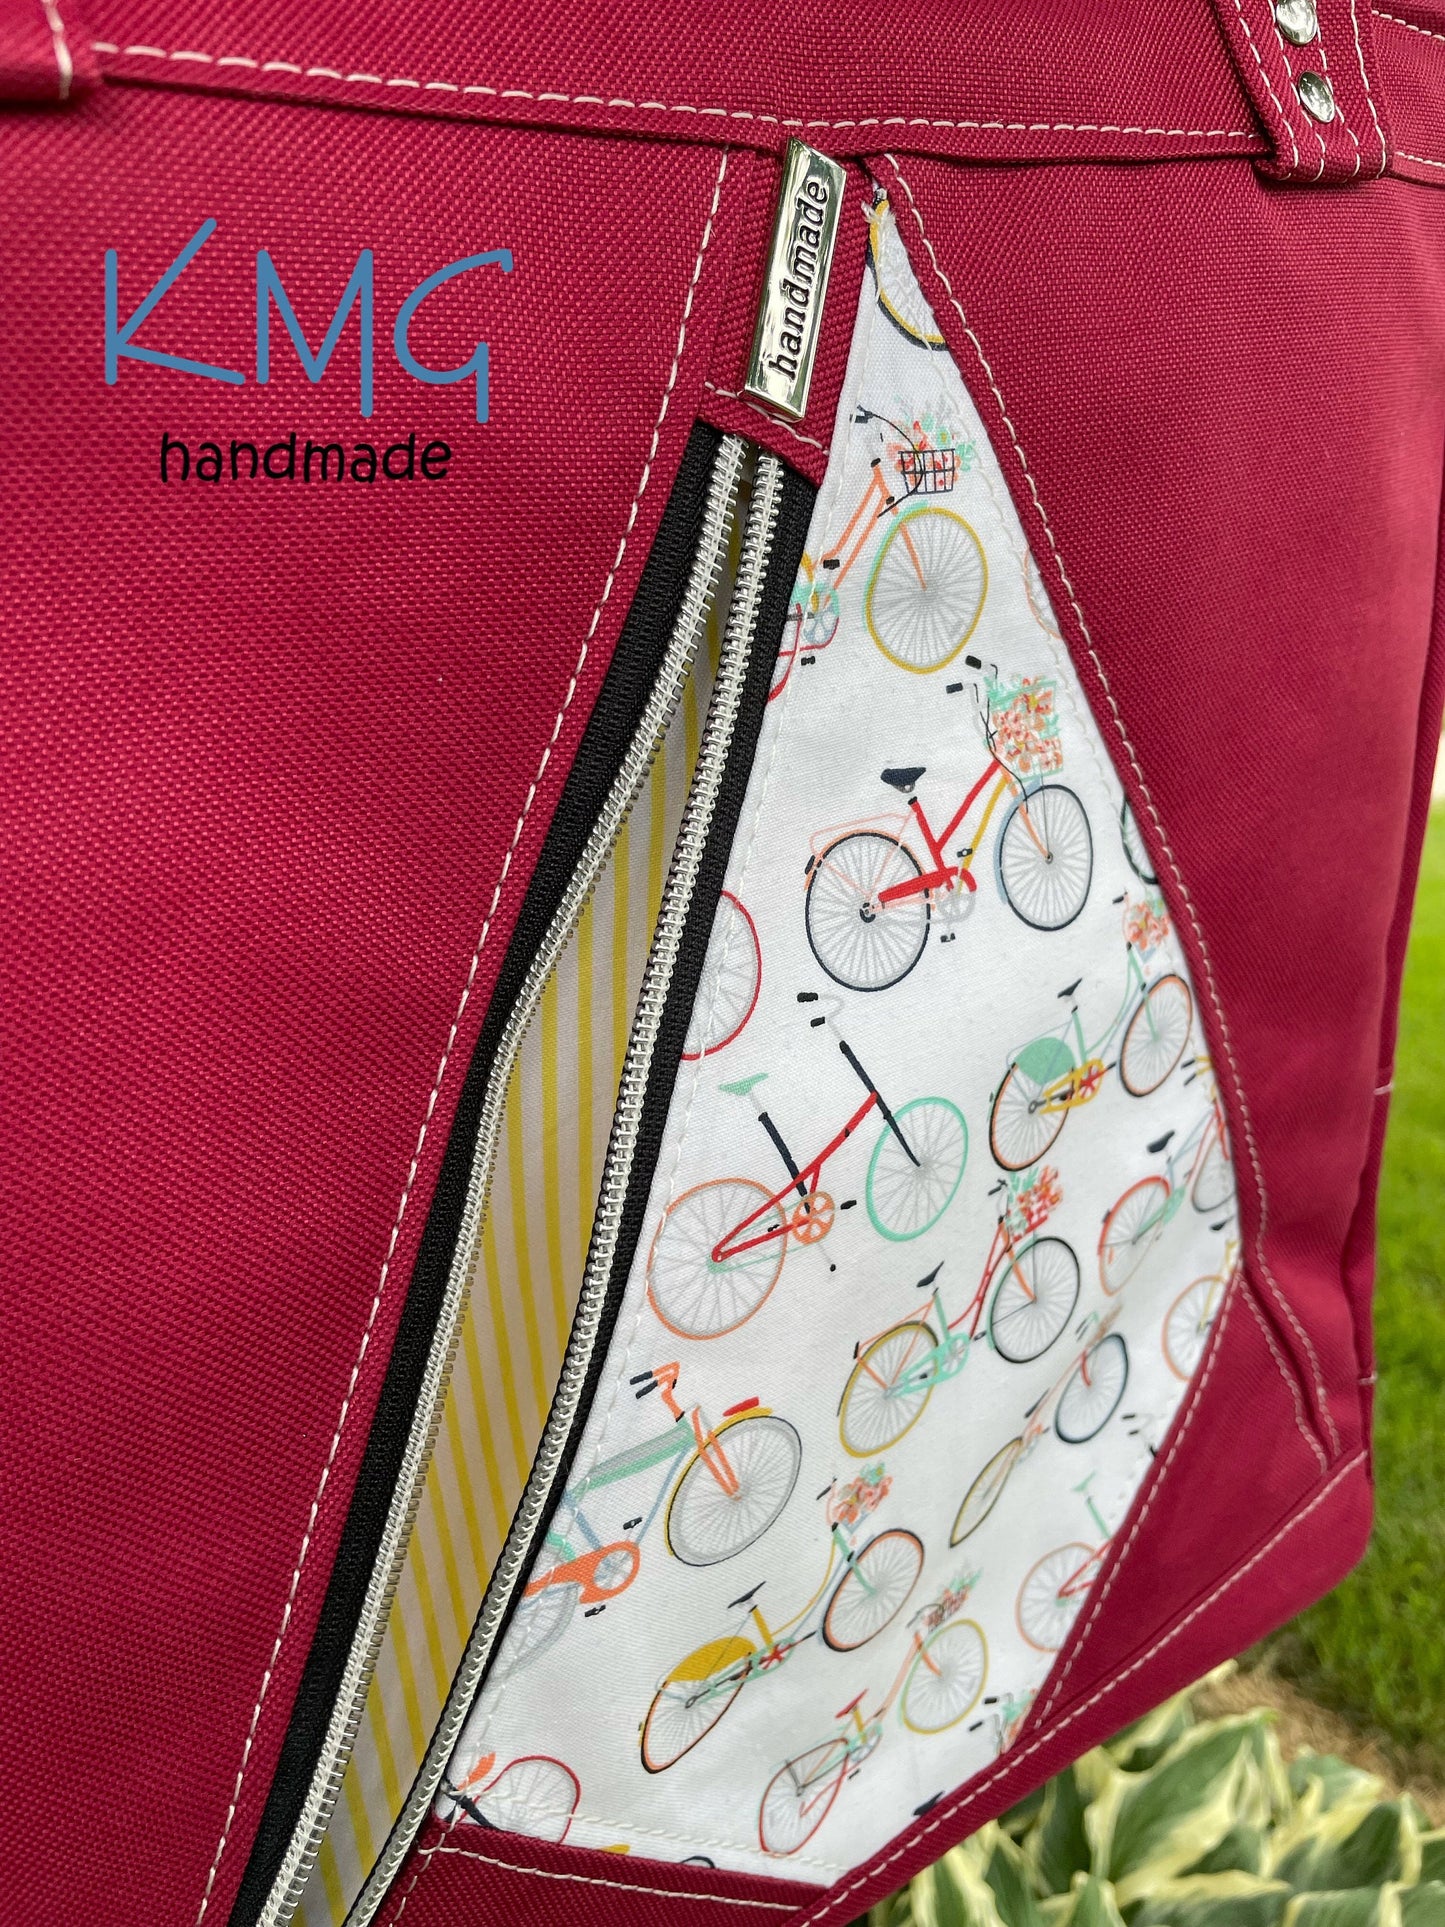 KMGhandmade Original Compass Business Bag - Bicycle Tote